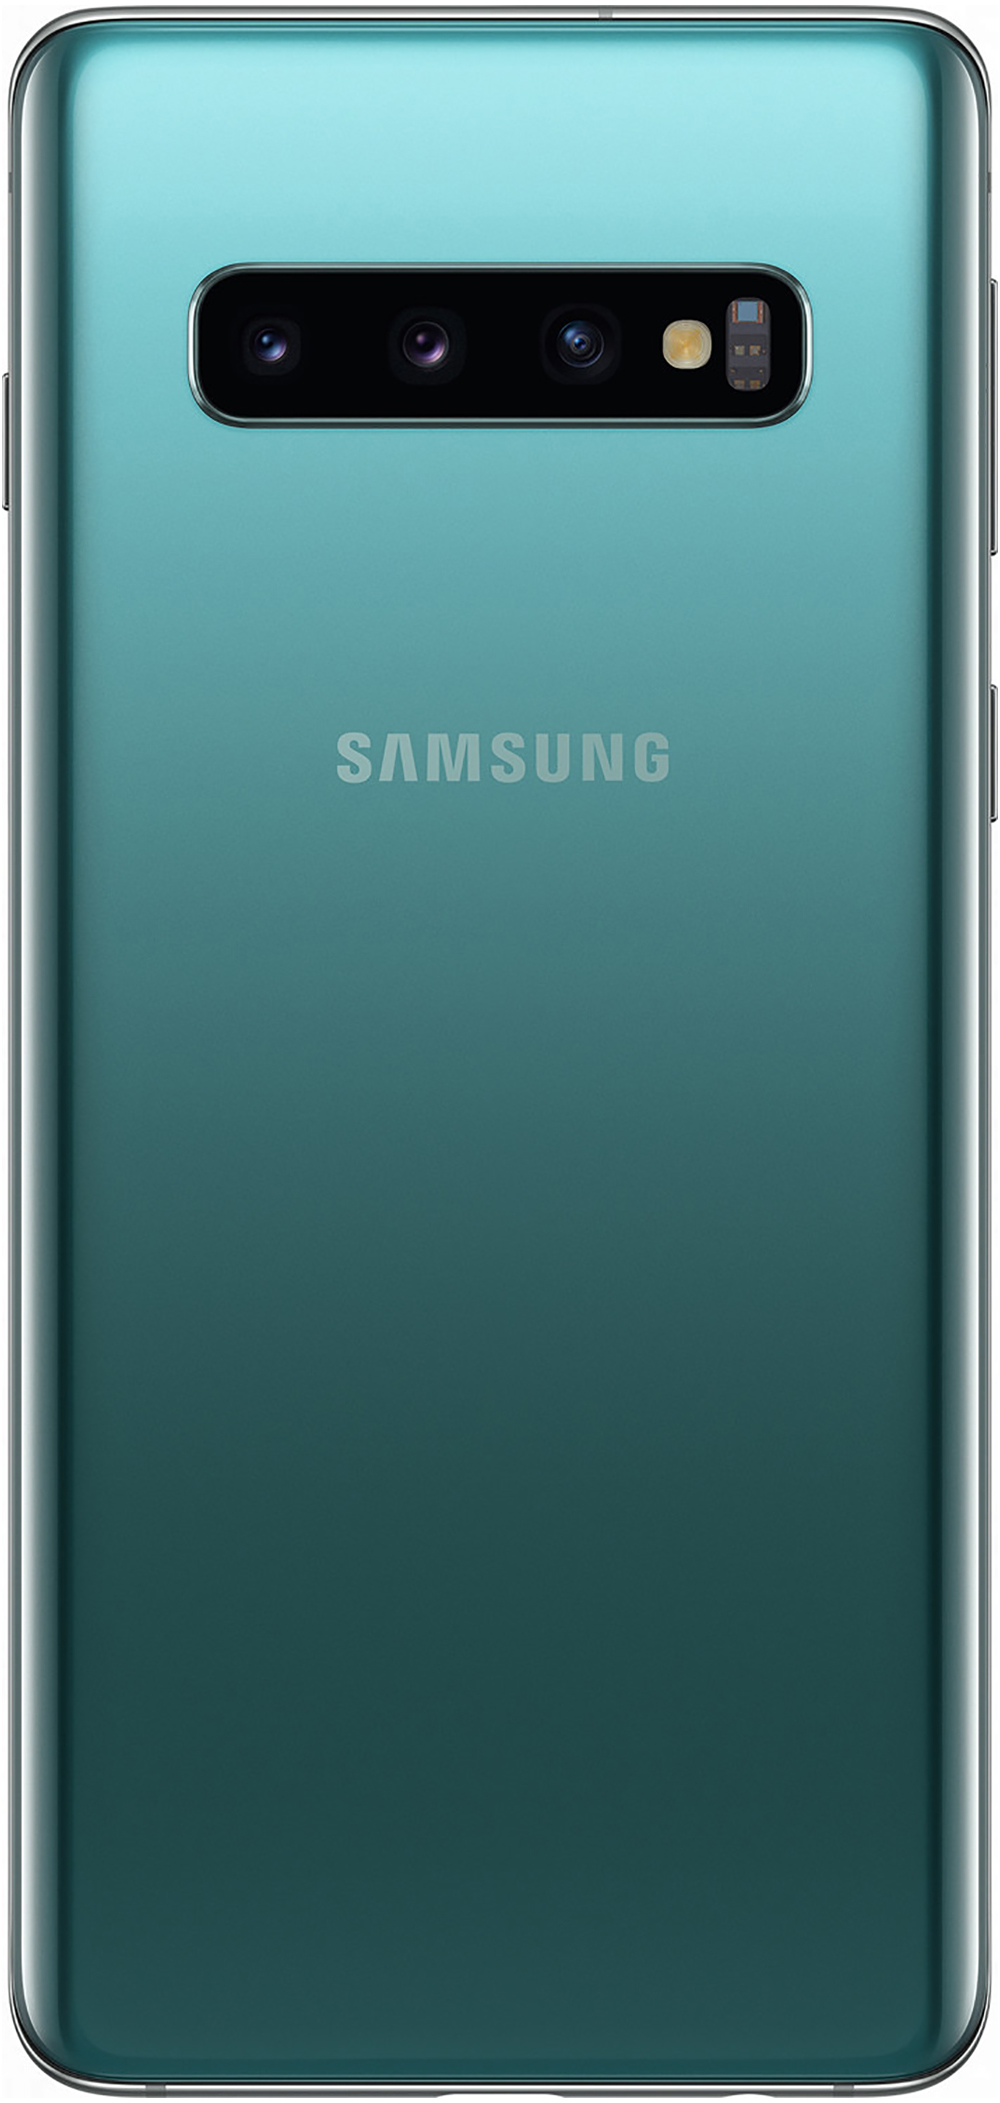 SAMSUNG Galaxy S10 G973, 128GB, GSM Unlocked Dual SIM – Green - image 4 of 6